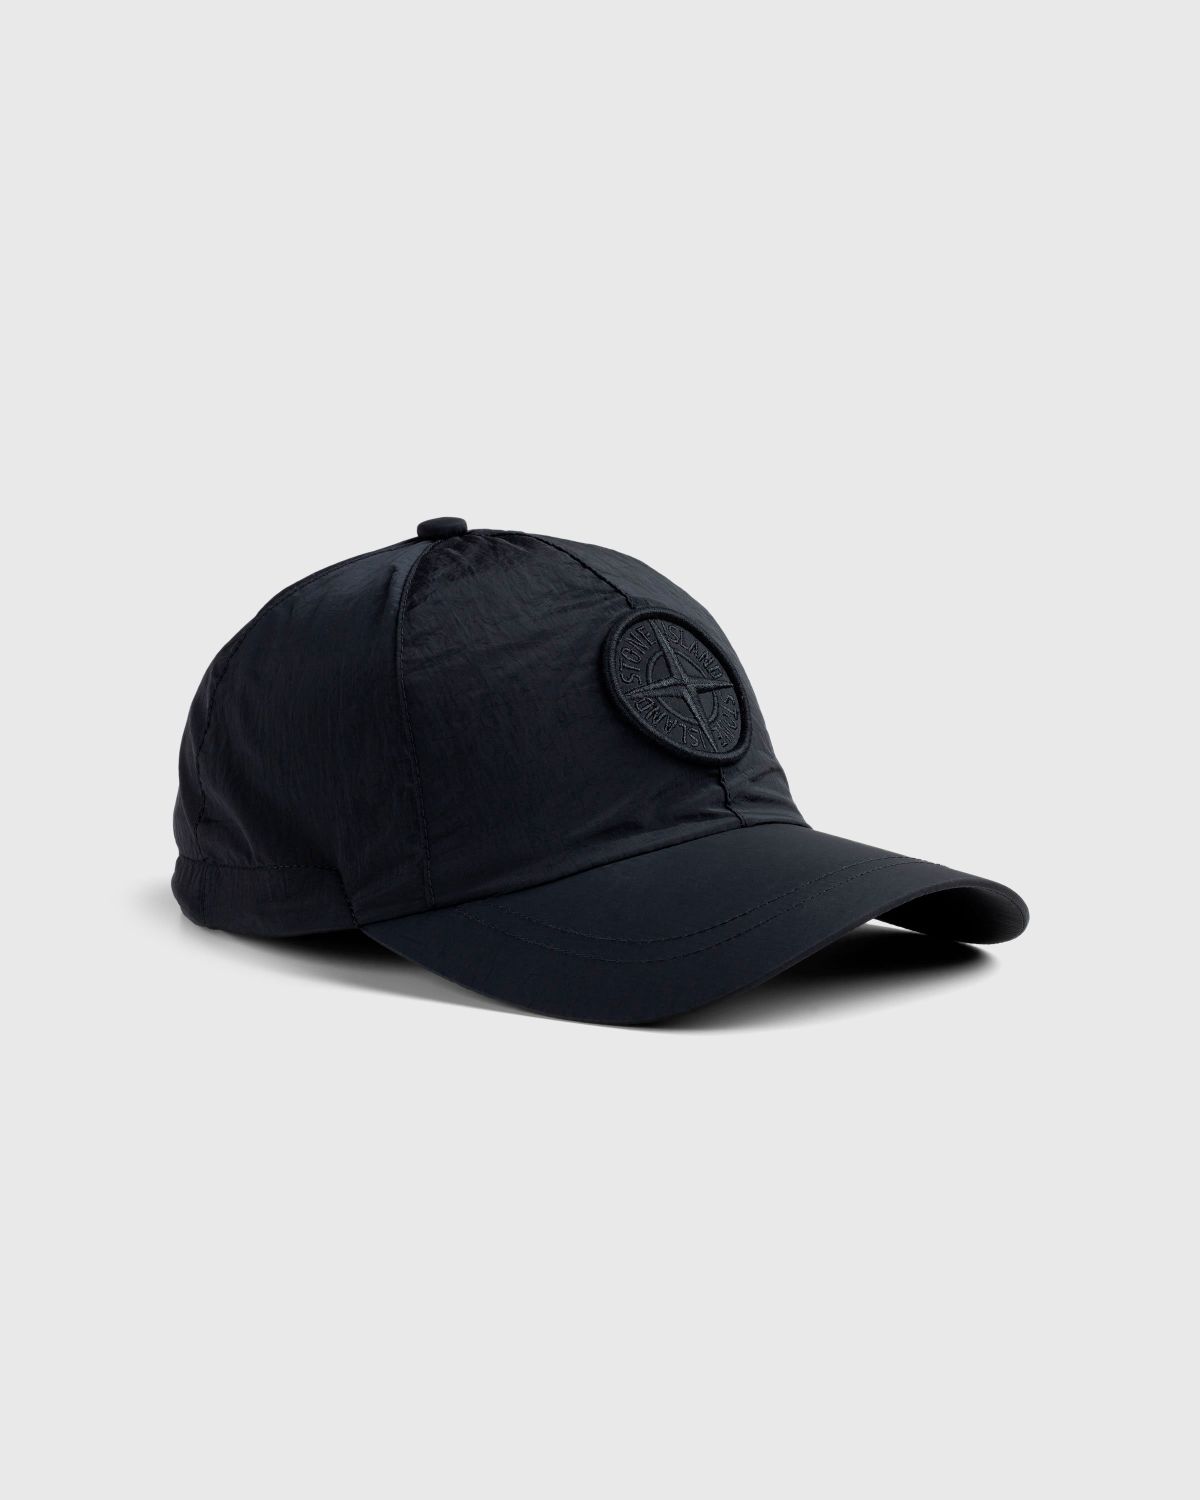 Stone Island – Six Panel Cap Black - Hats - Black - Image 1